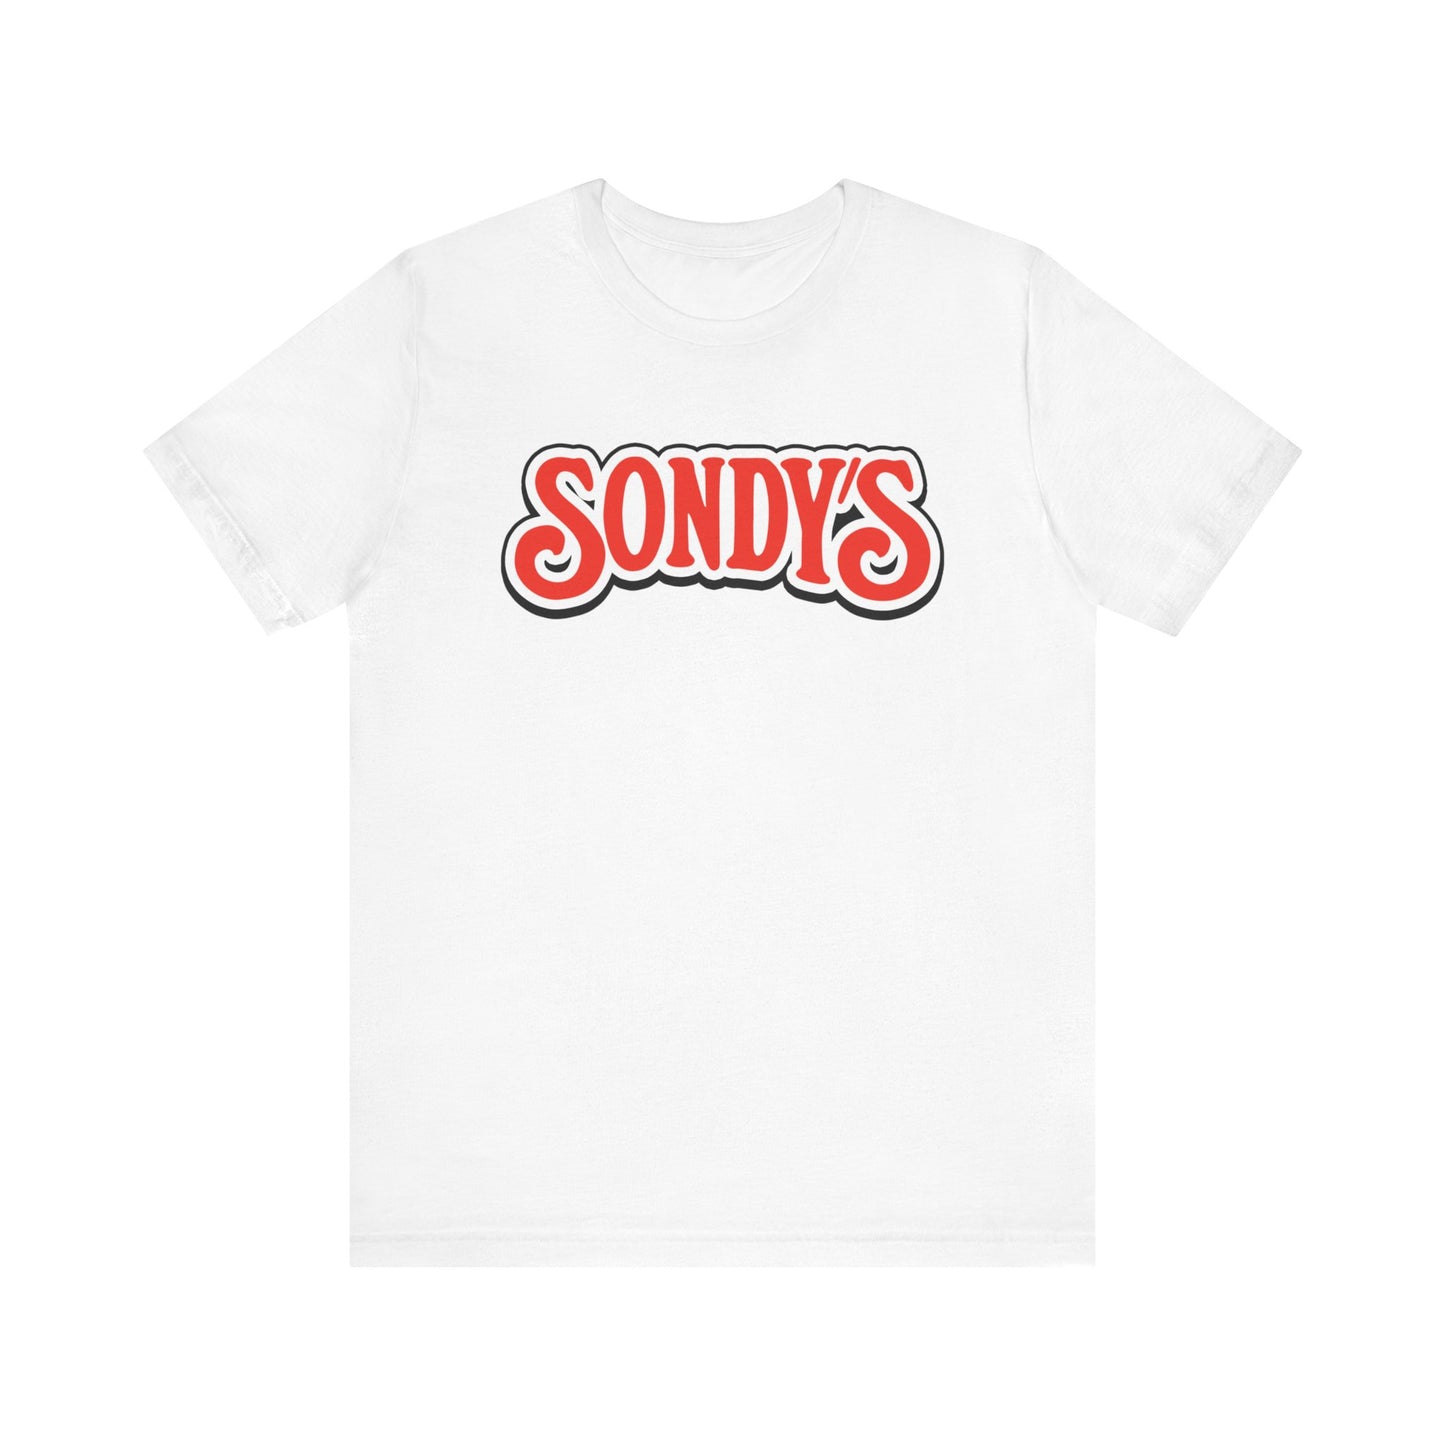 Sondy's Unisex Jersey Short Sleeve Tee